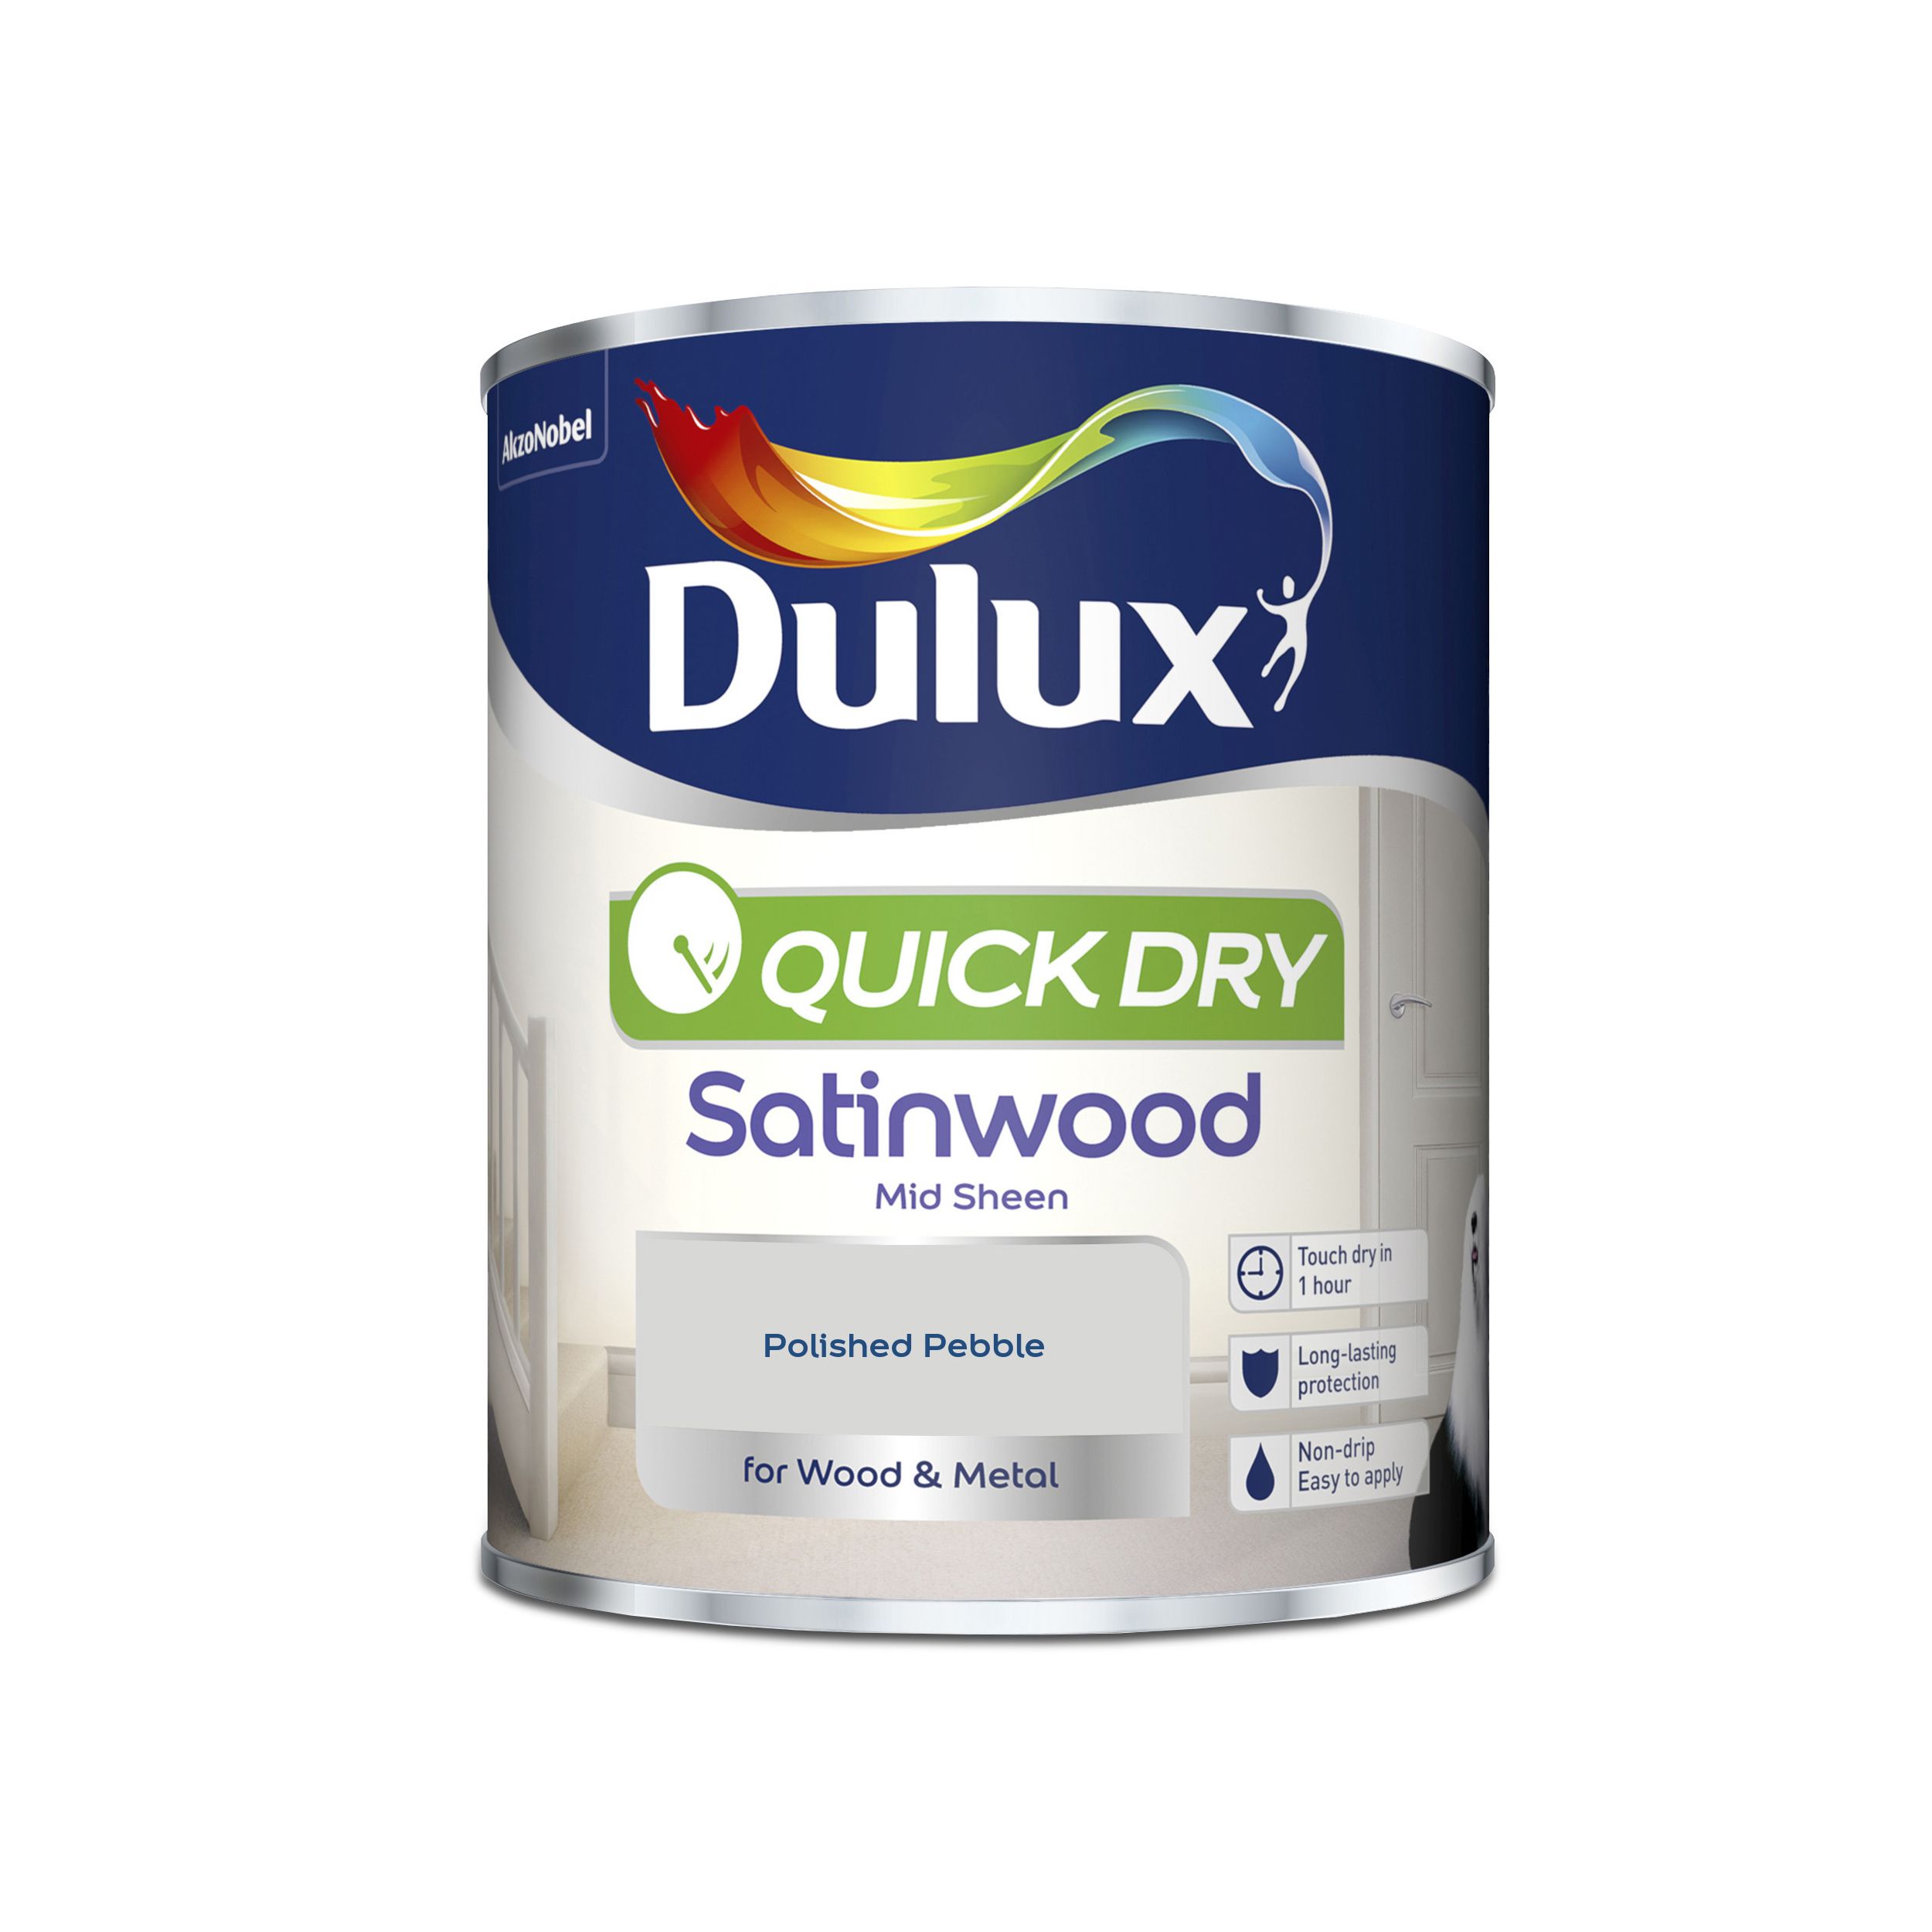 Dulux Polished pebble Satinwood Metal & wood paint, 750ml